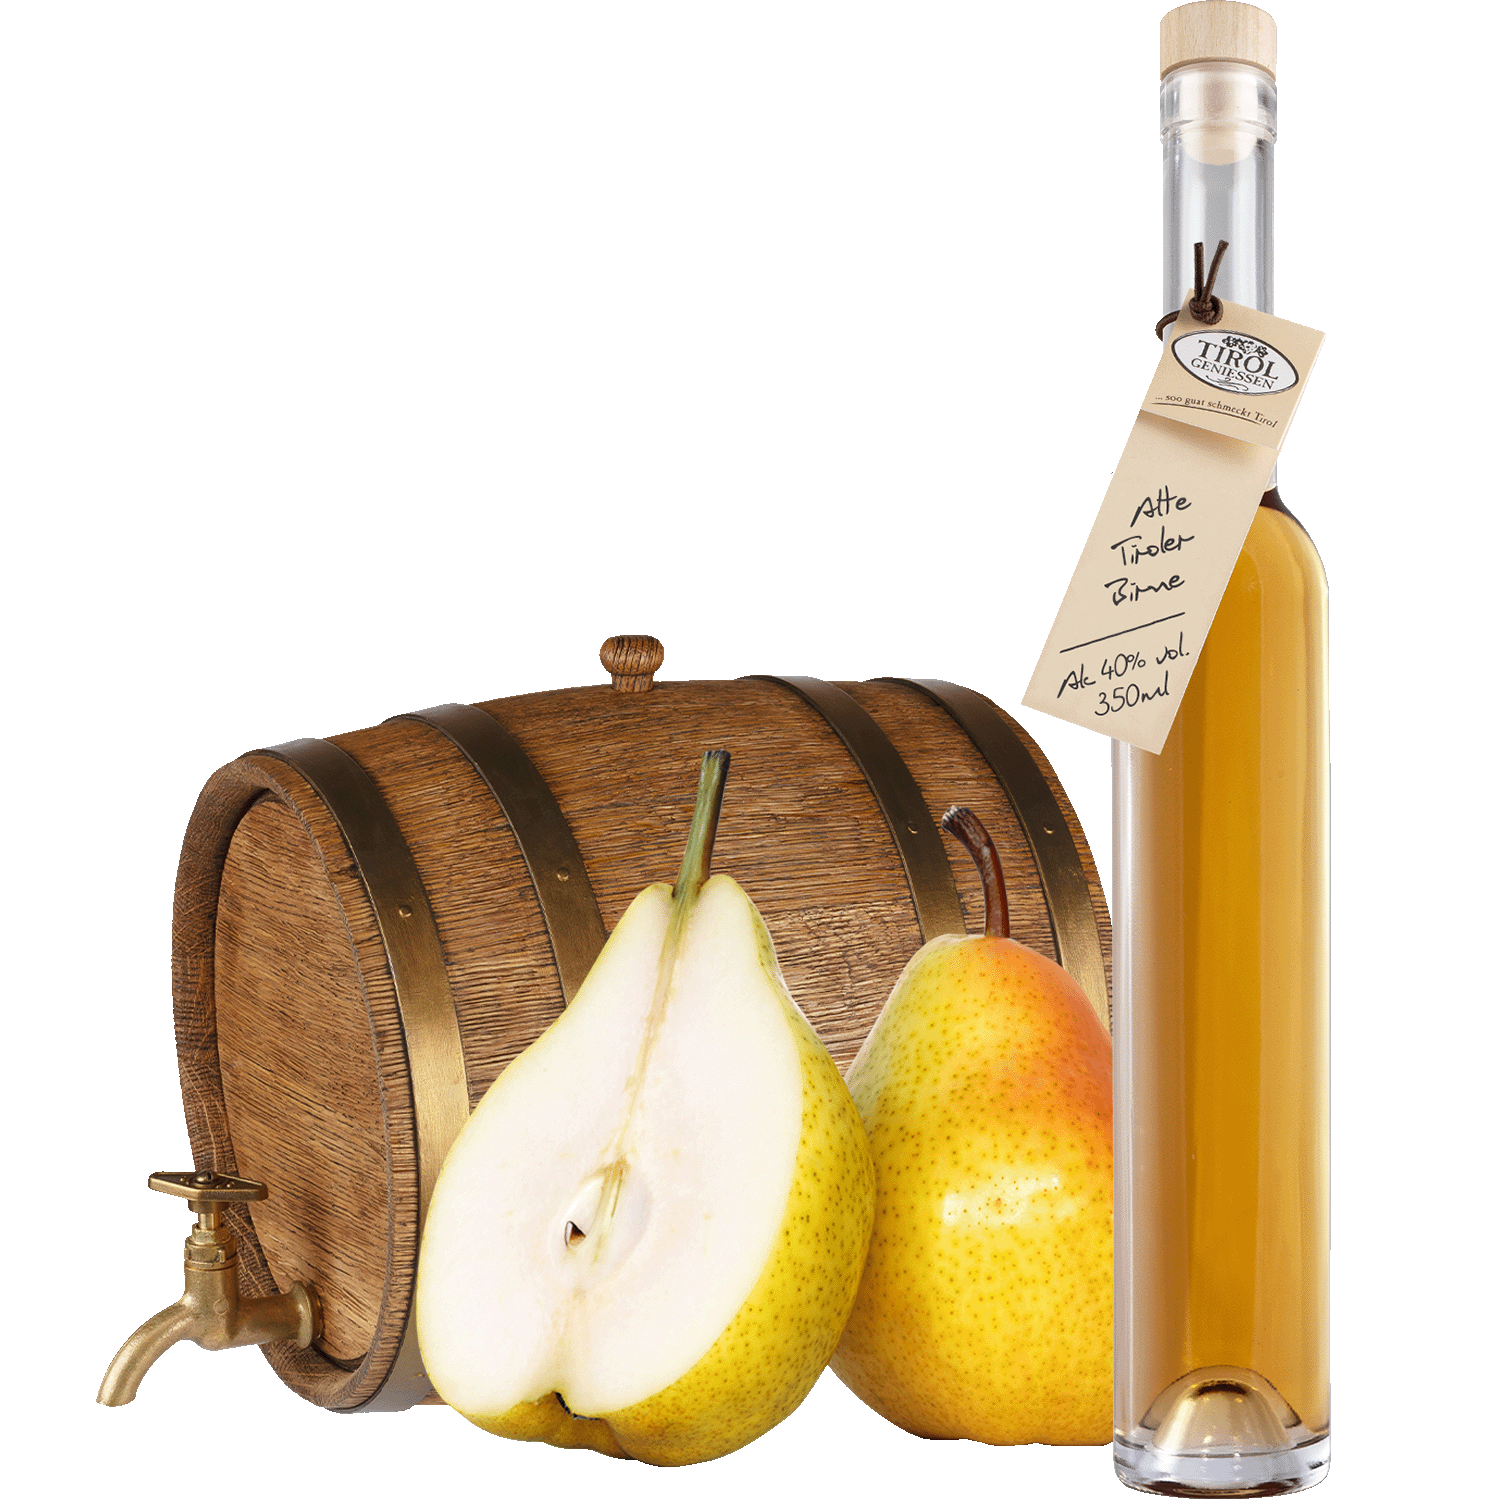 Old Williams Pear Spirit in gift bottle from Austria from Tirol Geniessen